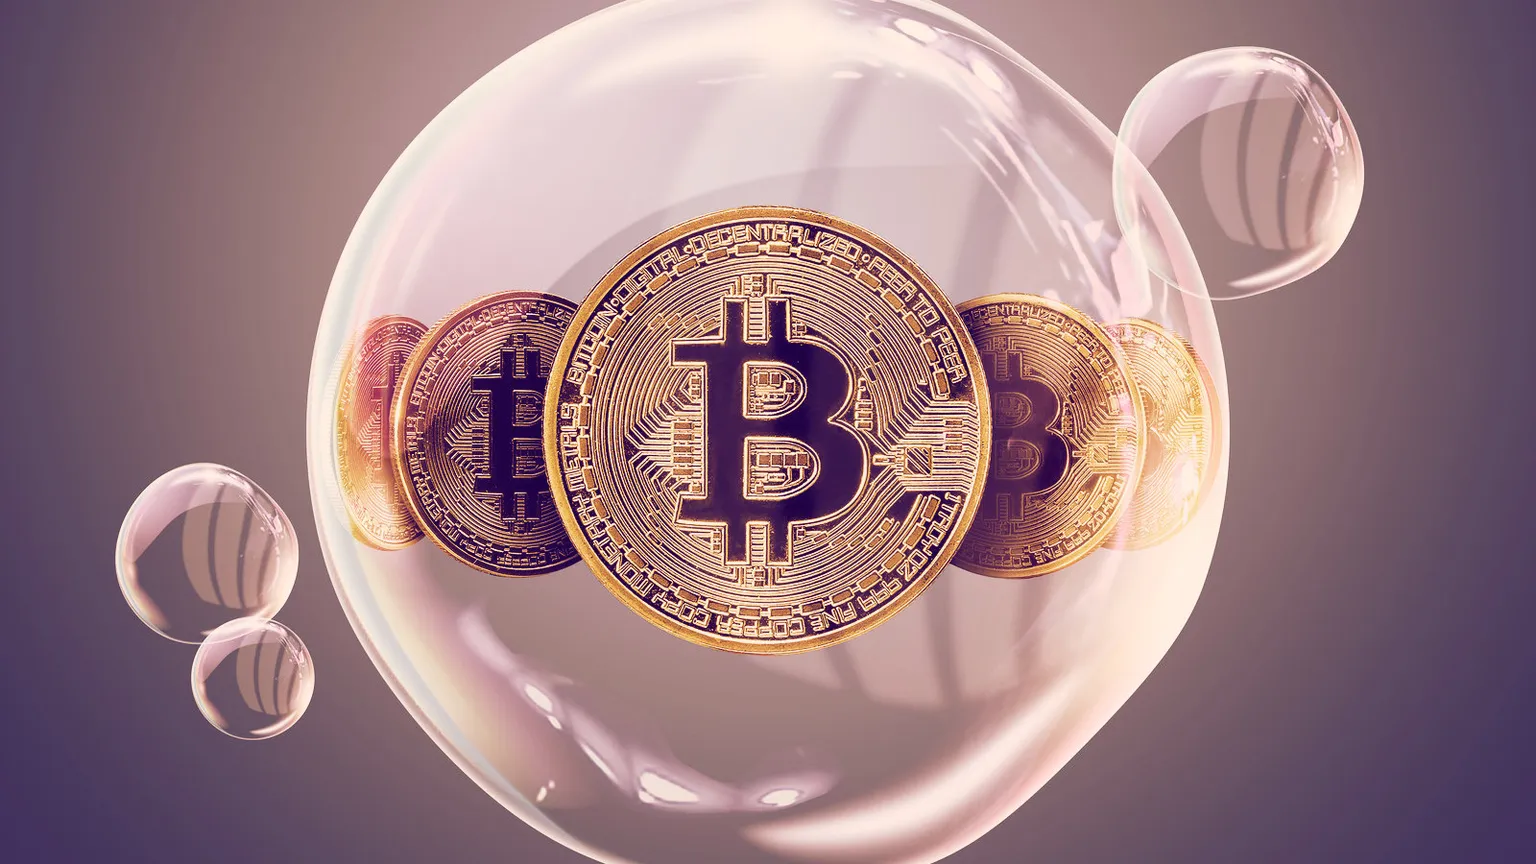 Bitcoin in a bubble. Image: Shutterstock